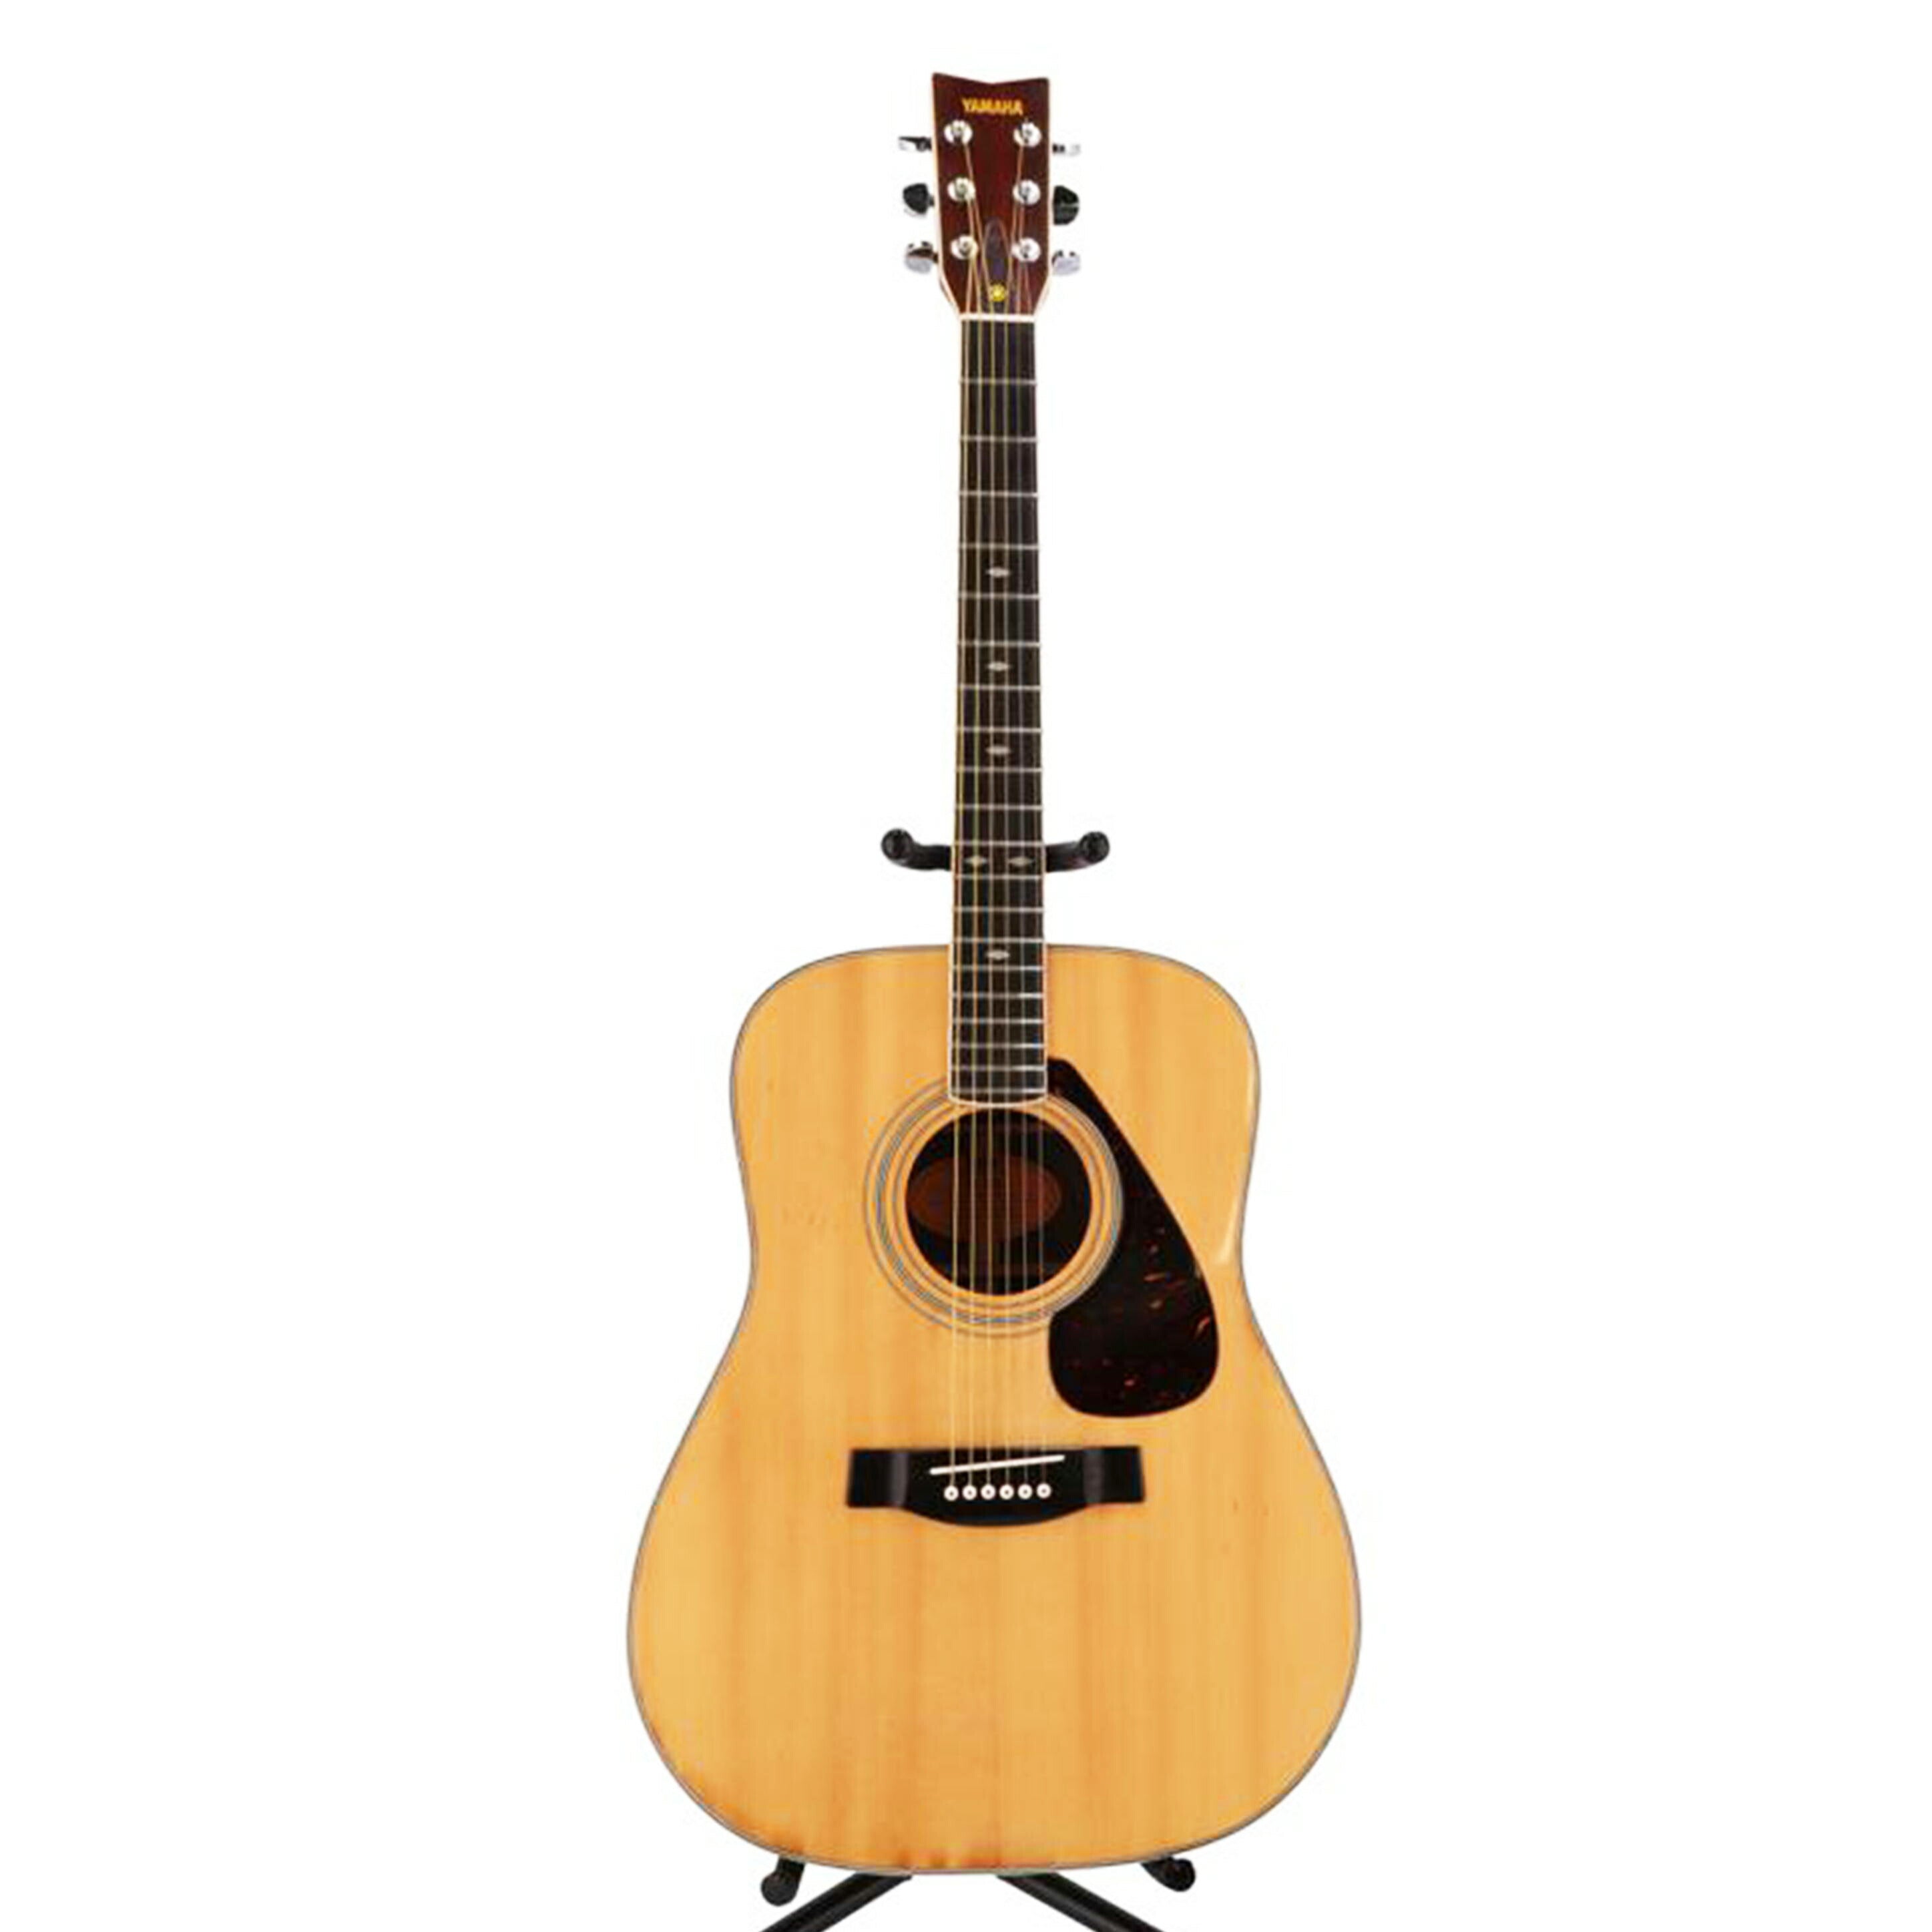 YAMAHA アコースティックギター FG-351 全長約103cm 弦高6弦約6mm 1弦 